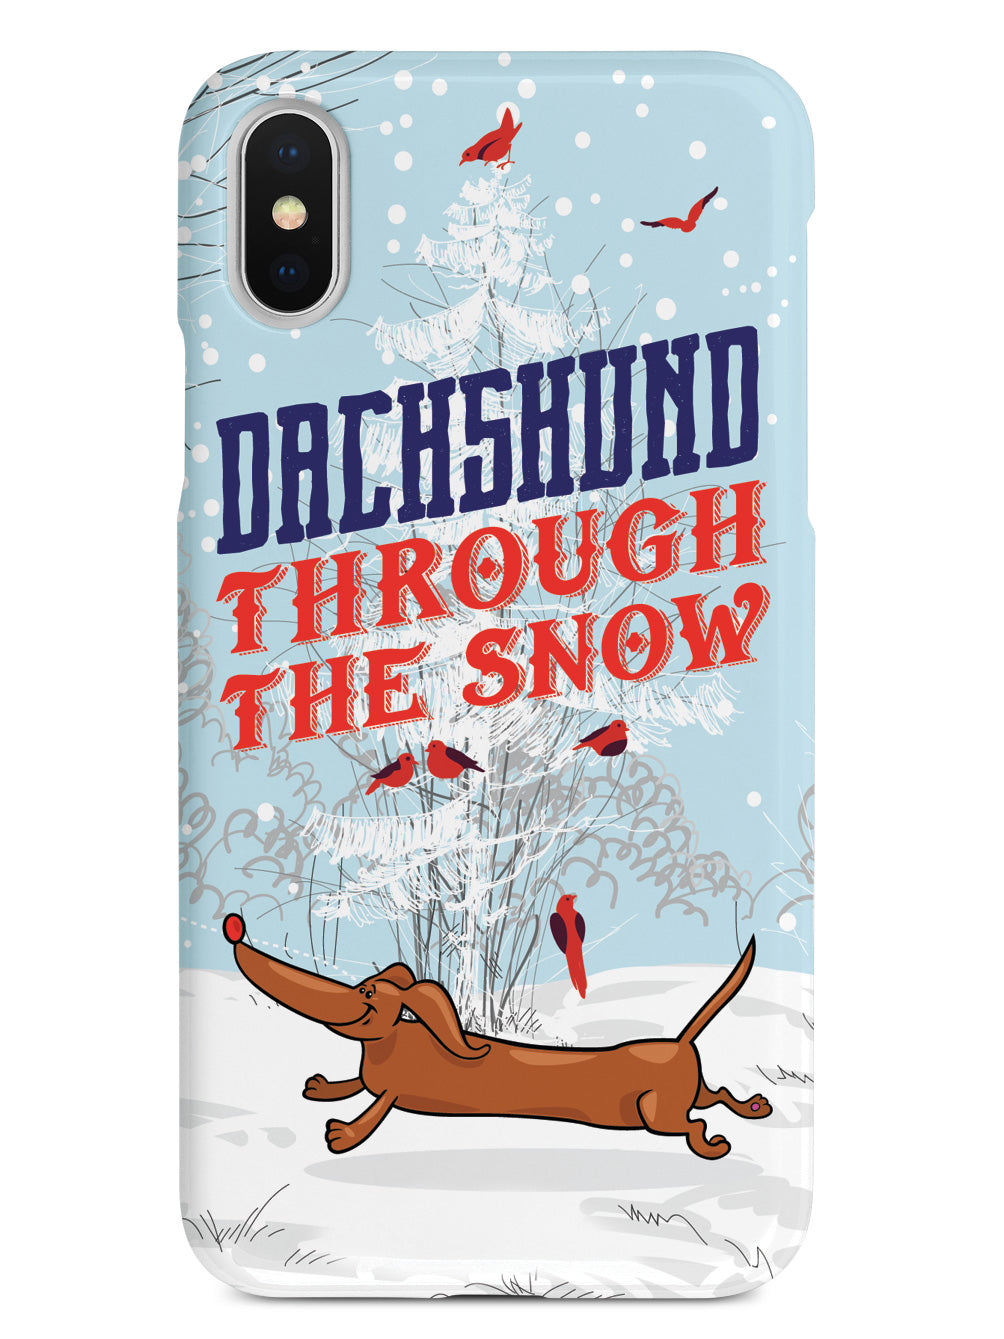 Dachshund Through the Snow Christmas Case